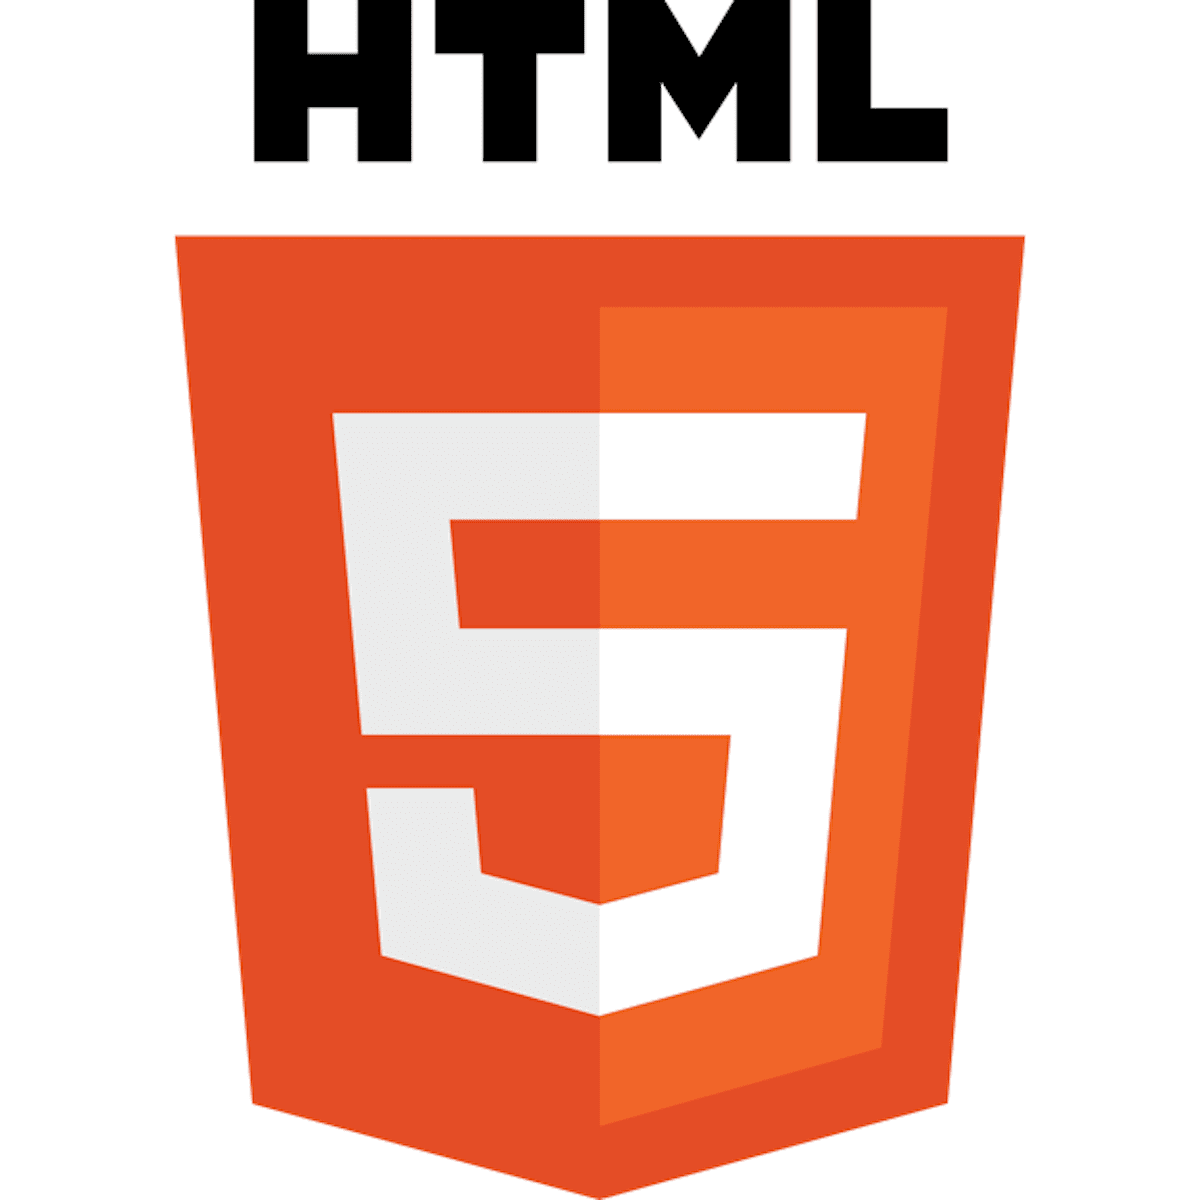  “html5 logo.”